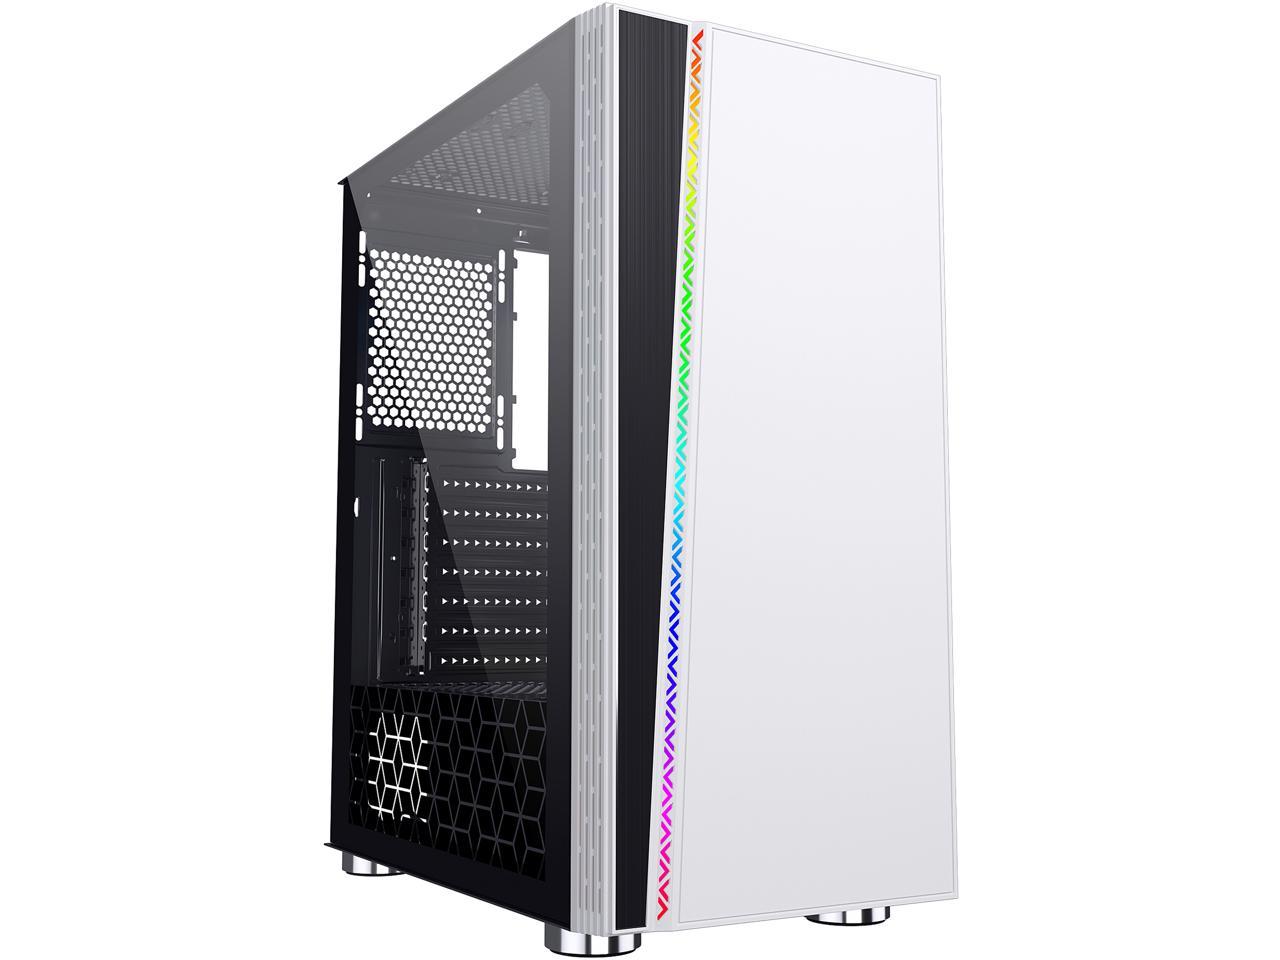 DIYPC DIY-D2-RGB-W White USB 3.0 Steel/ Tempered Glass Mid Tower Case + $10GC/AR @Newegg $38